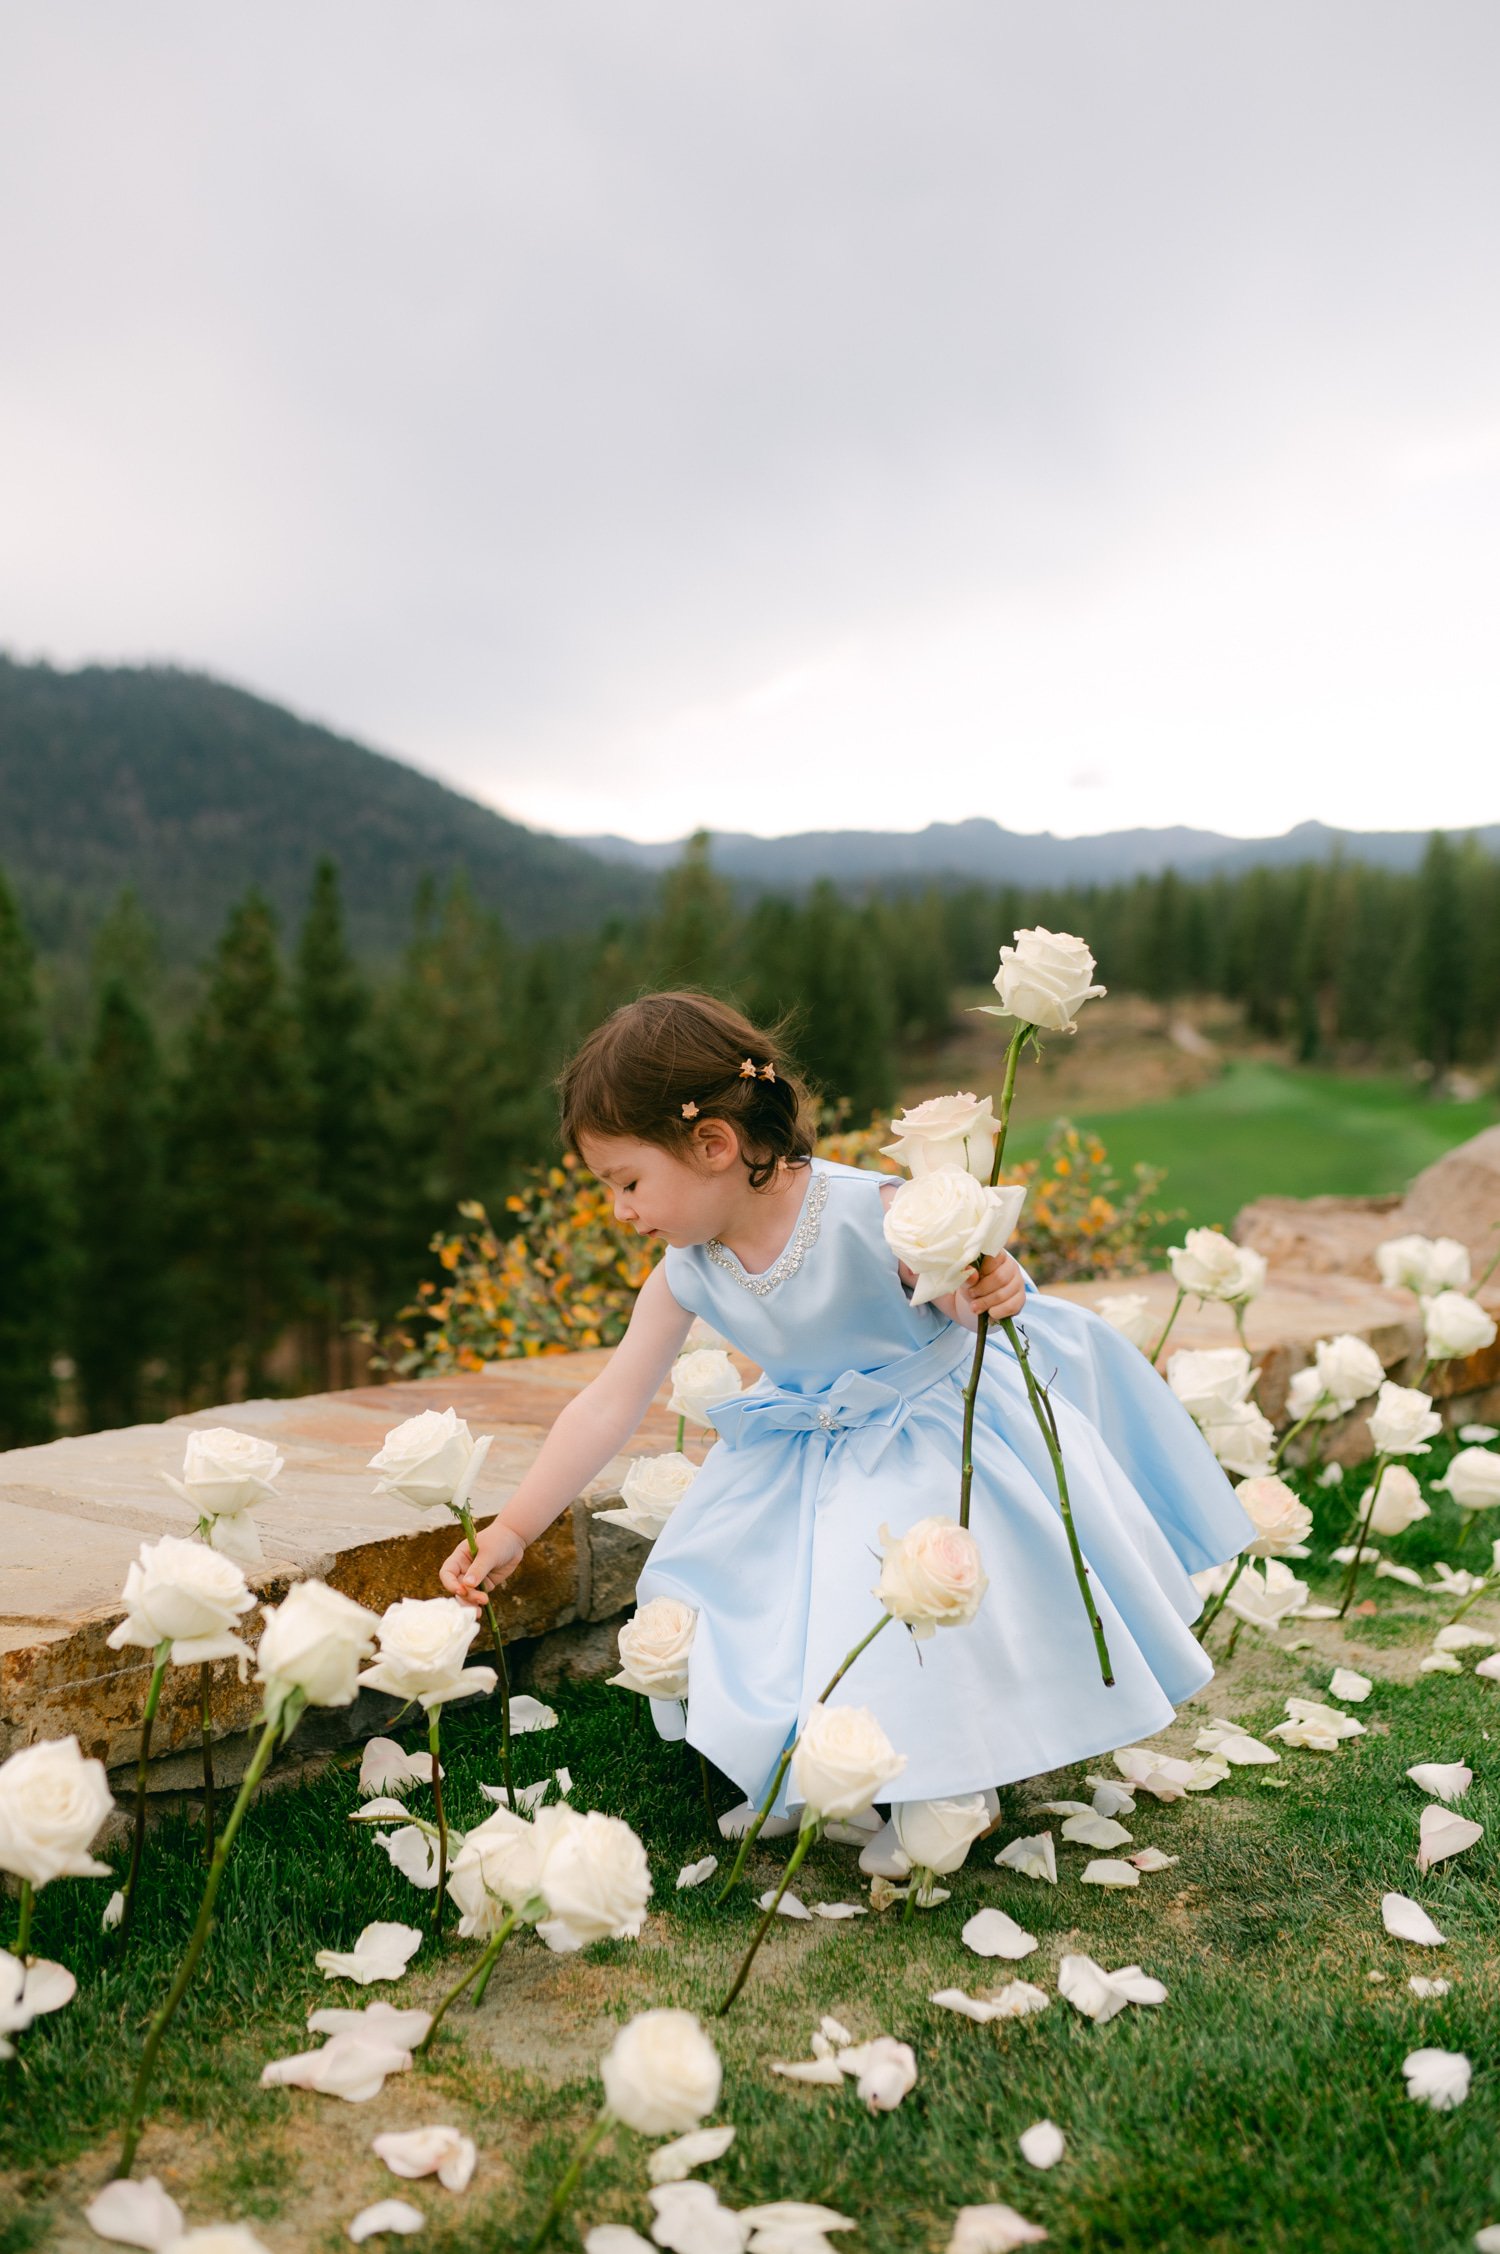 Martis Camp Wedding, photo of the flower girl wearing blue dress picking flowers